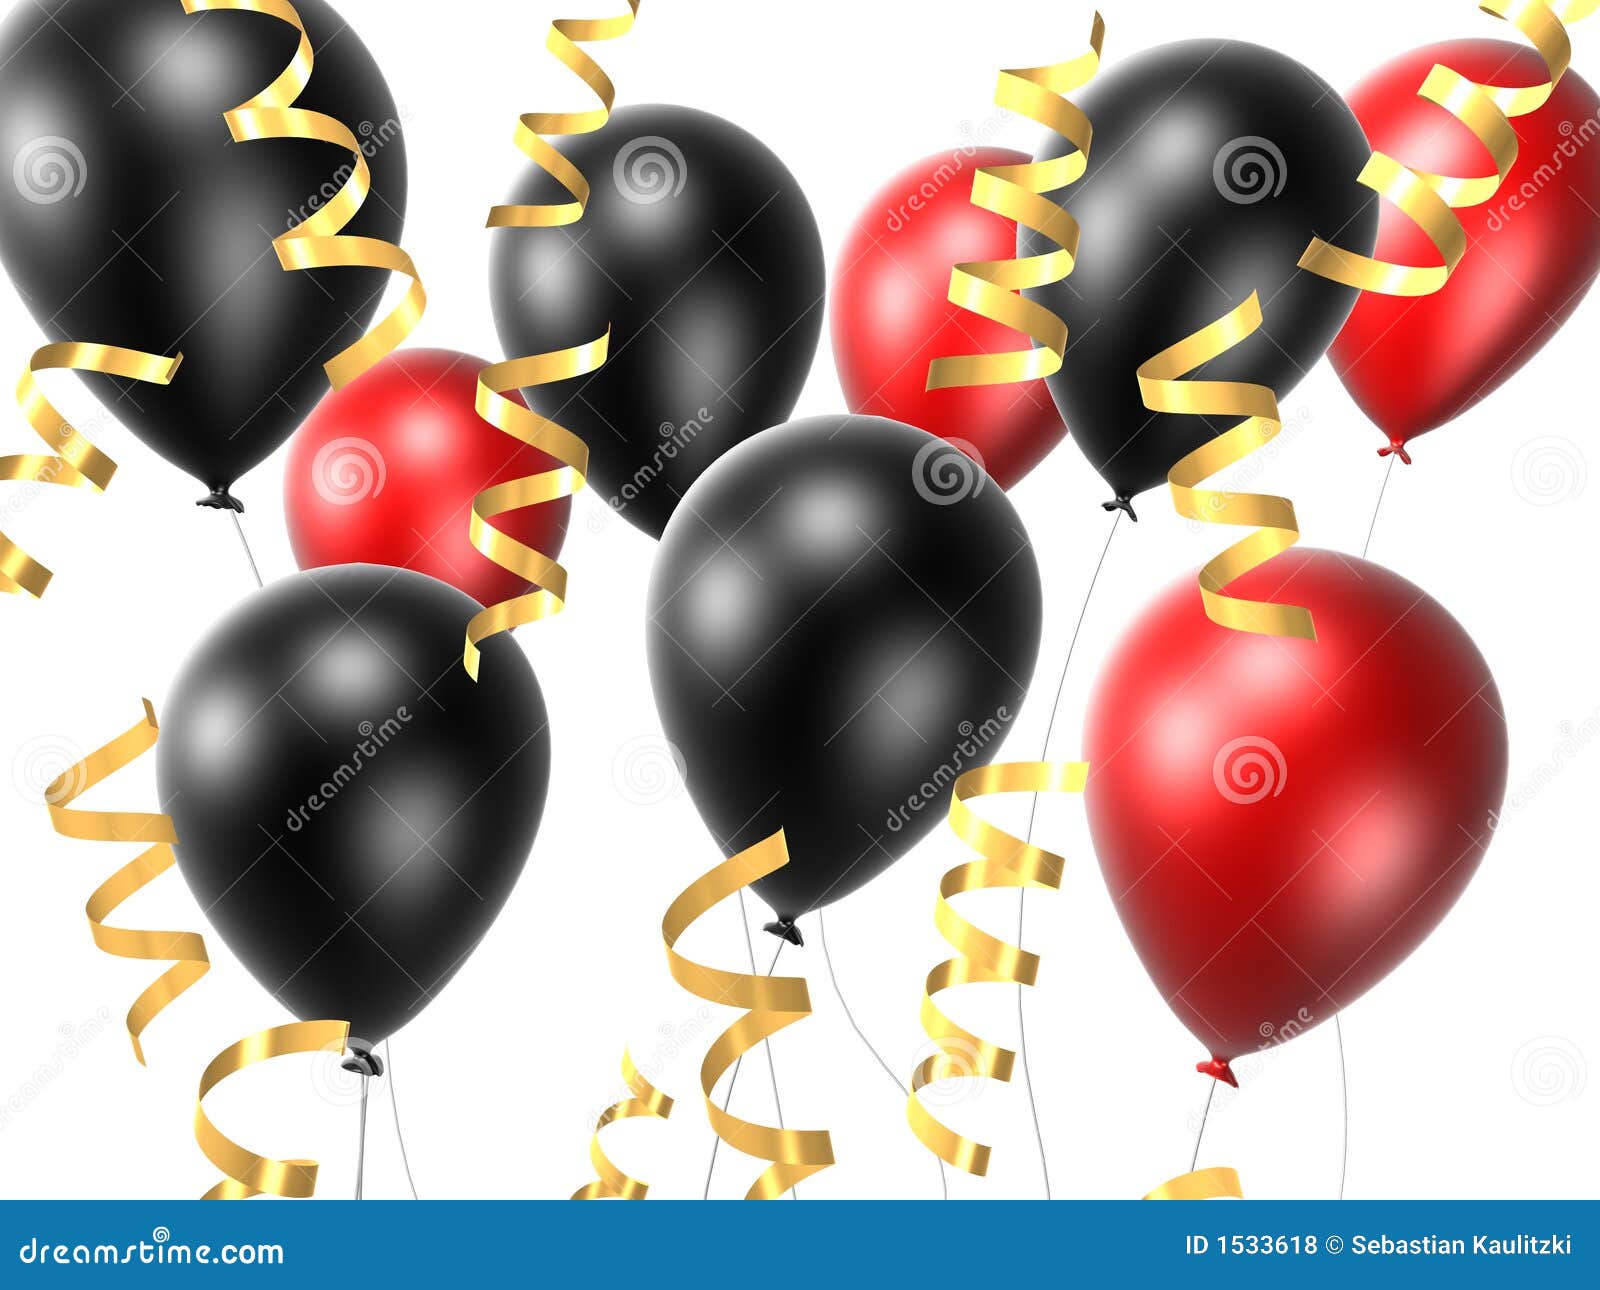 clip art balloons black background - photo #48